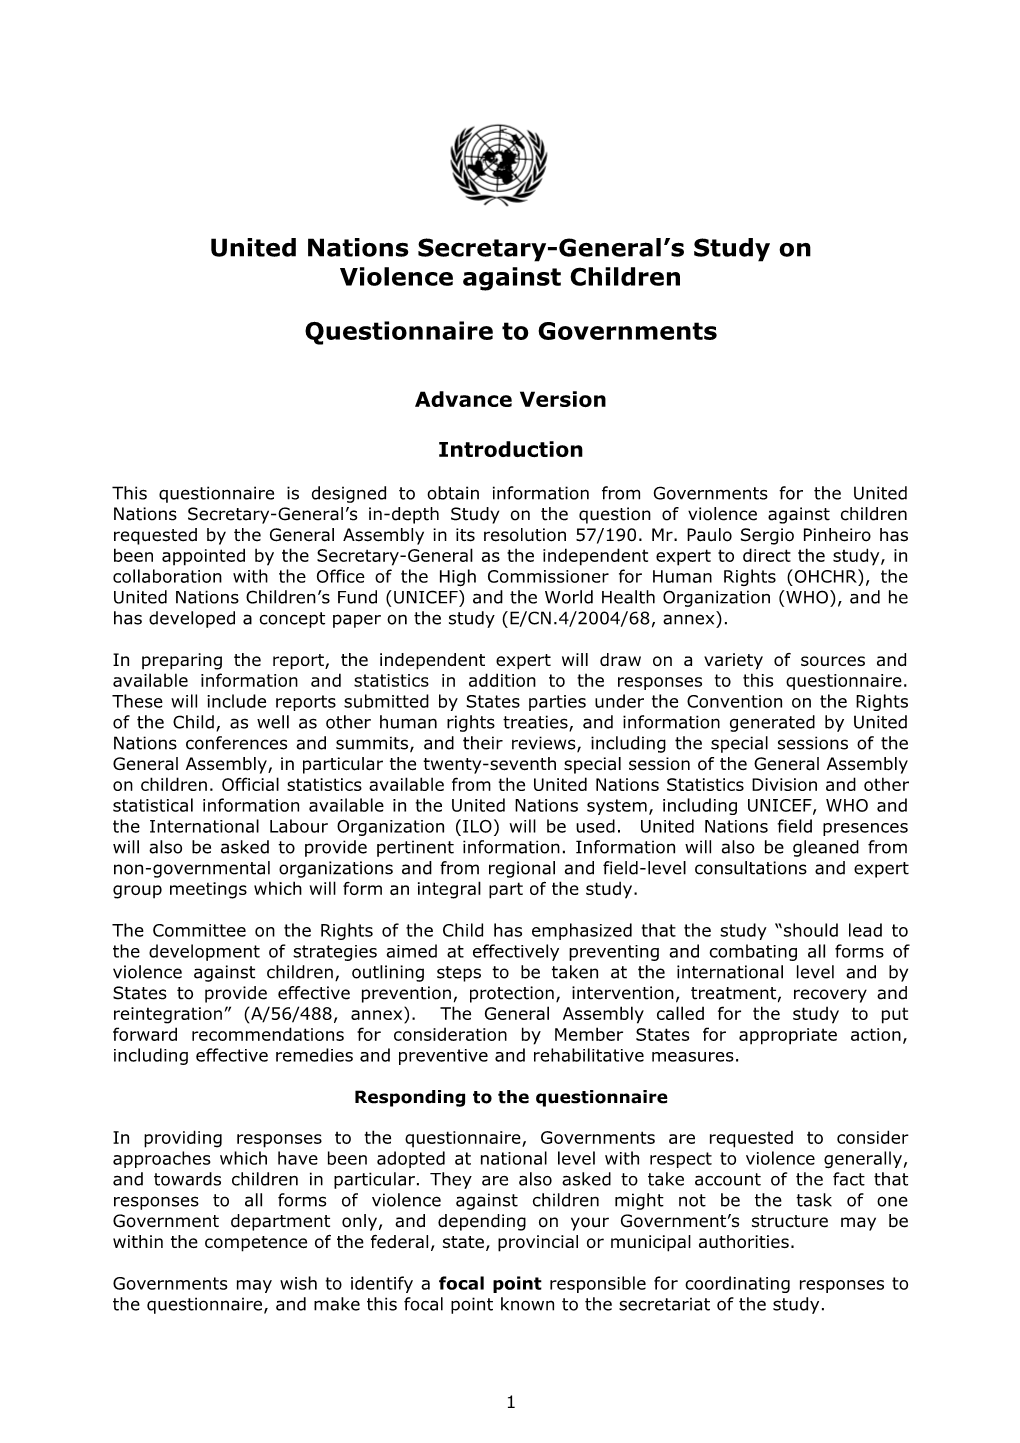 United Nations Secretary-General S Study On